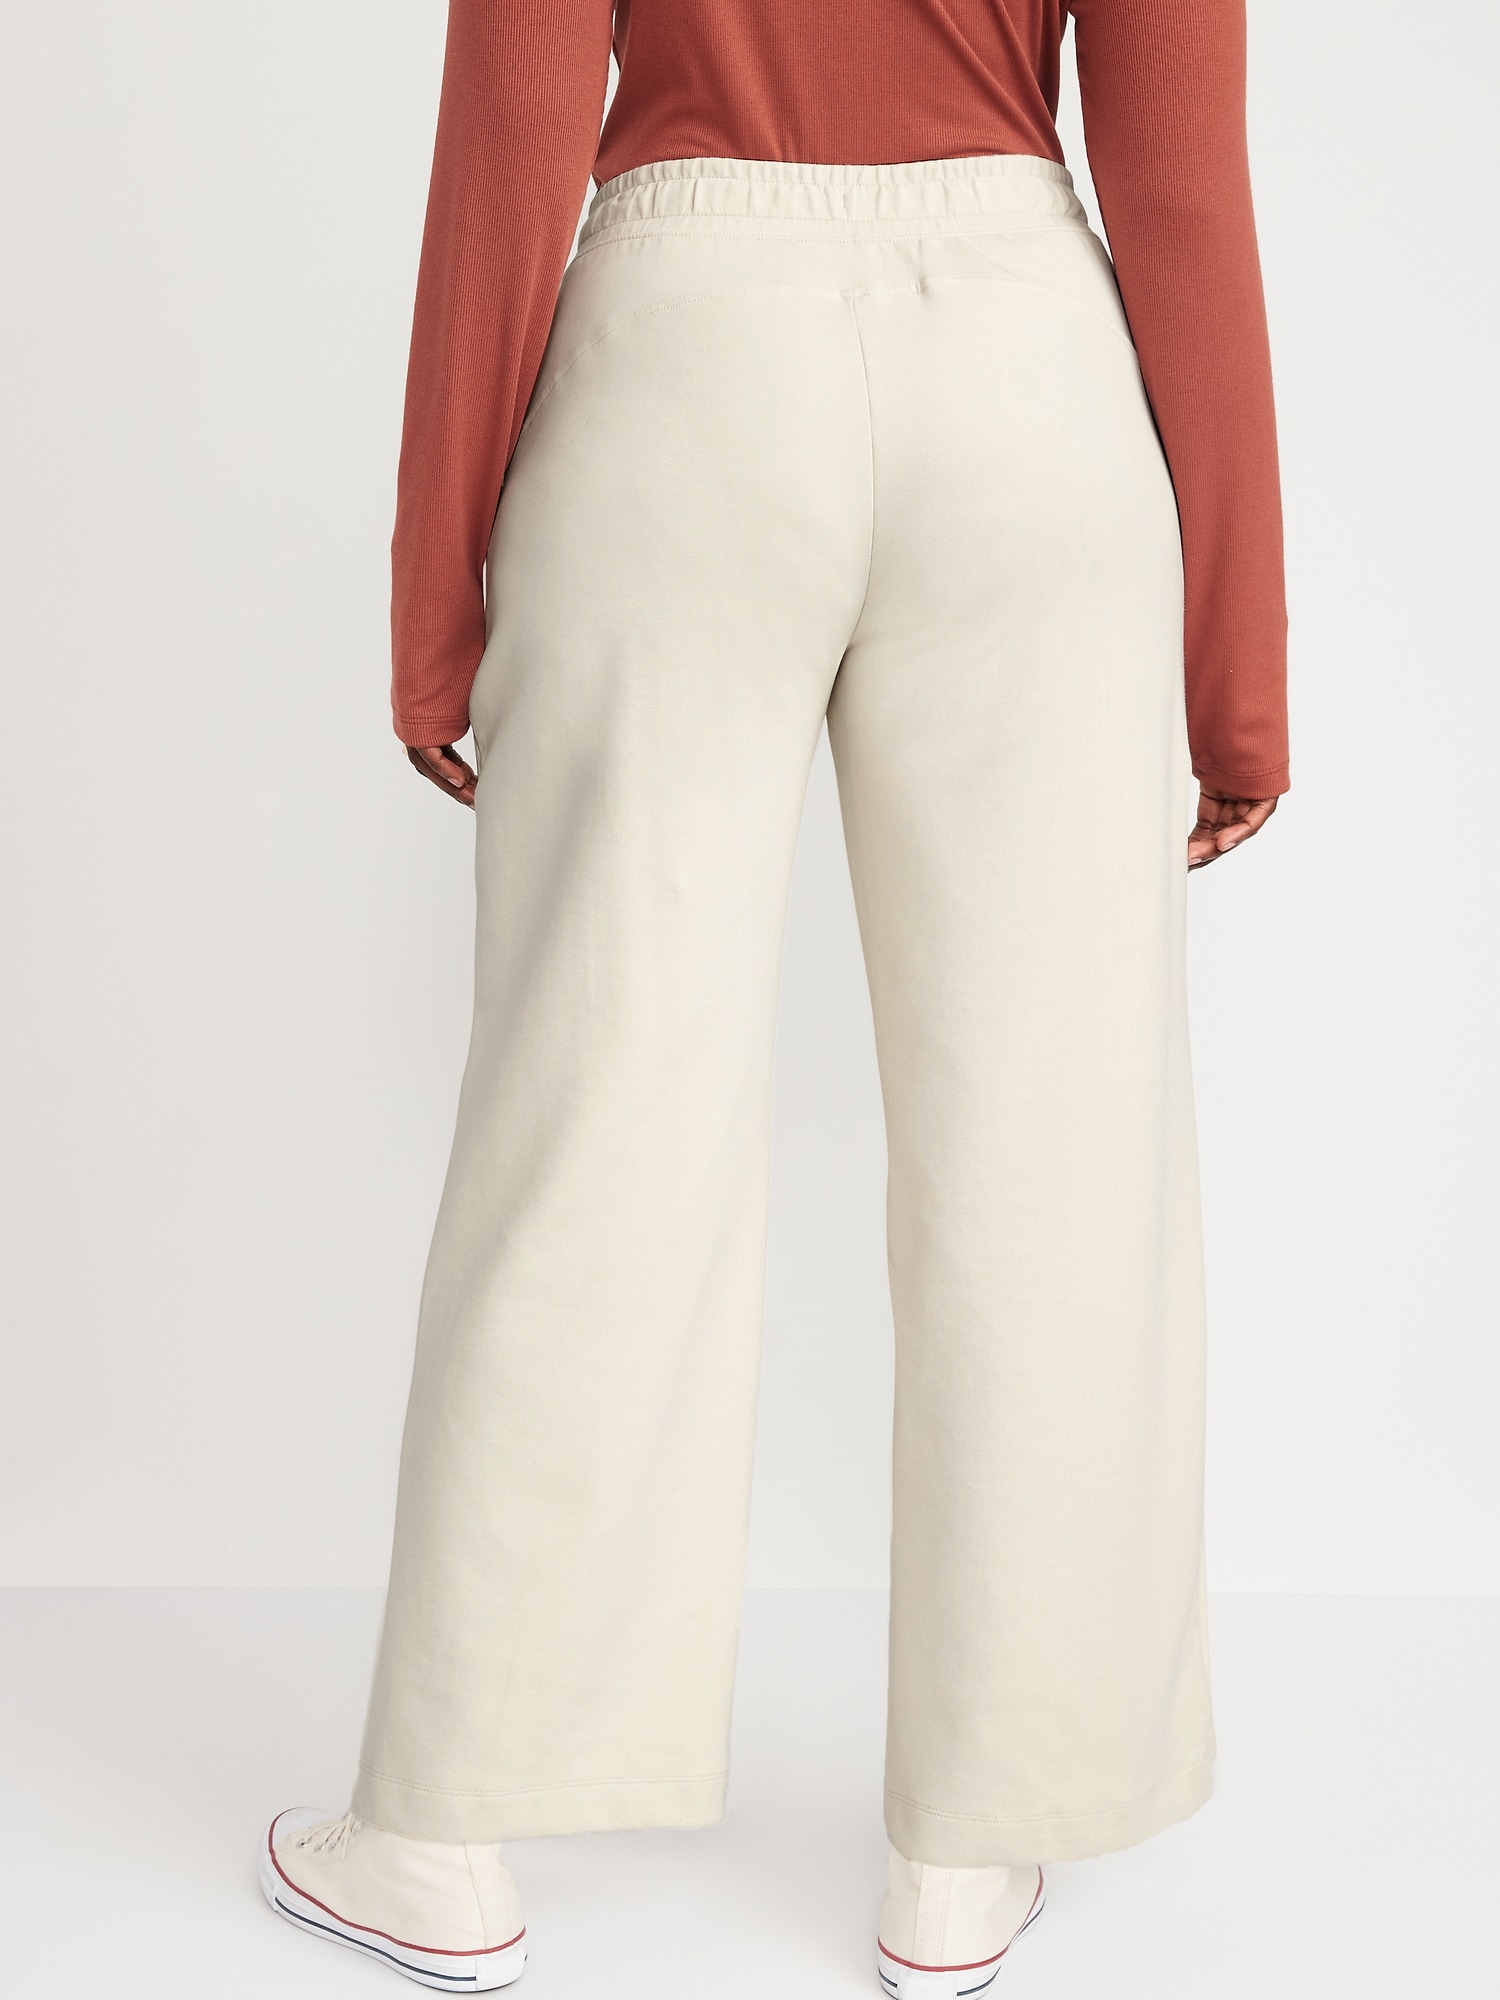 High-Waisted Dynamic Fleece Wide-Leg Pants for Women | Old Navy